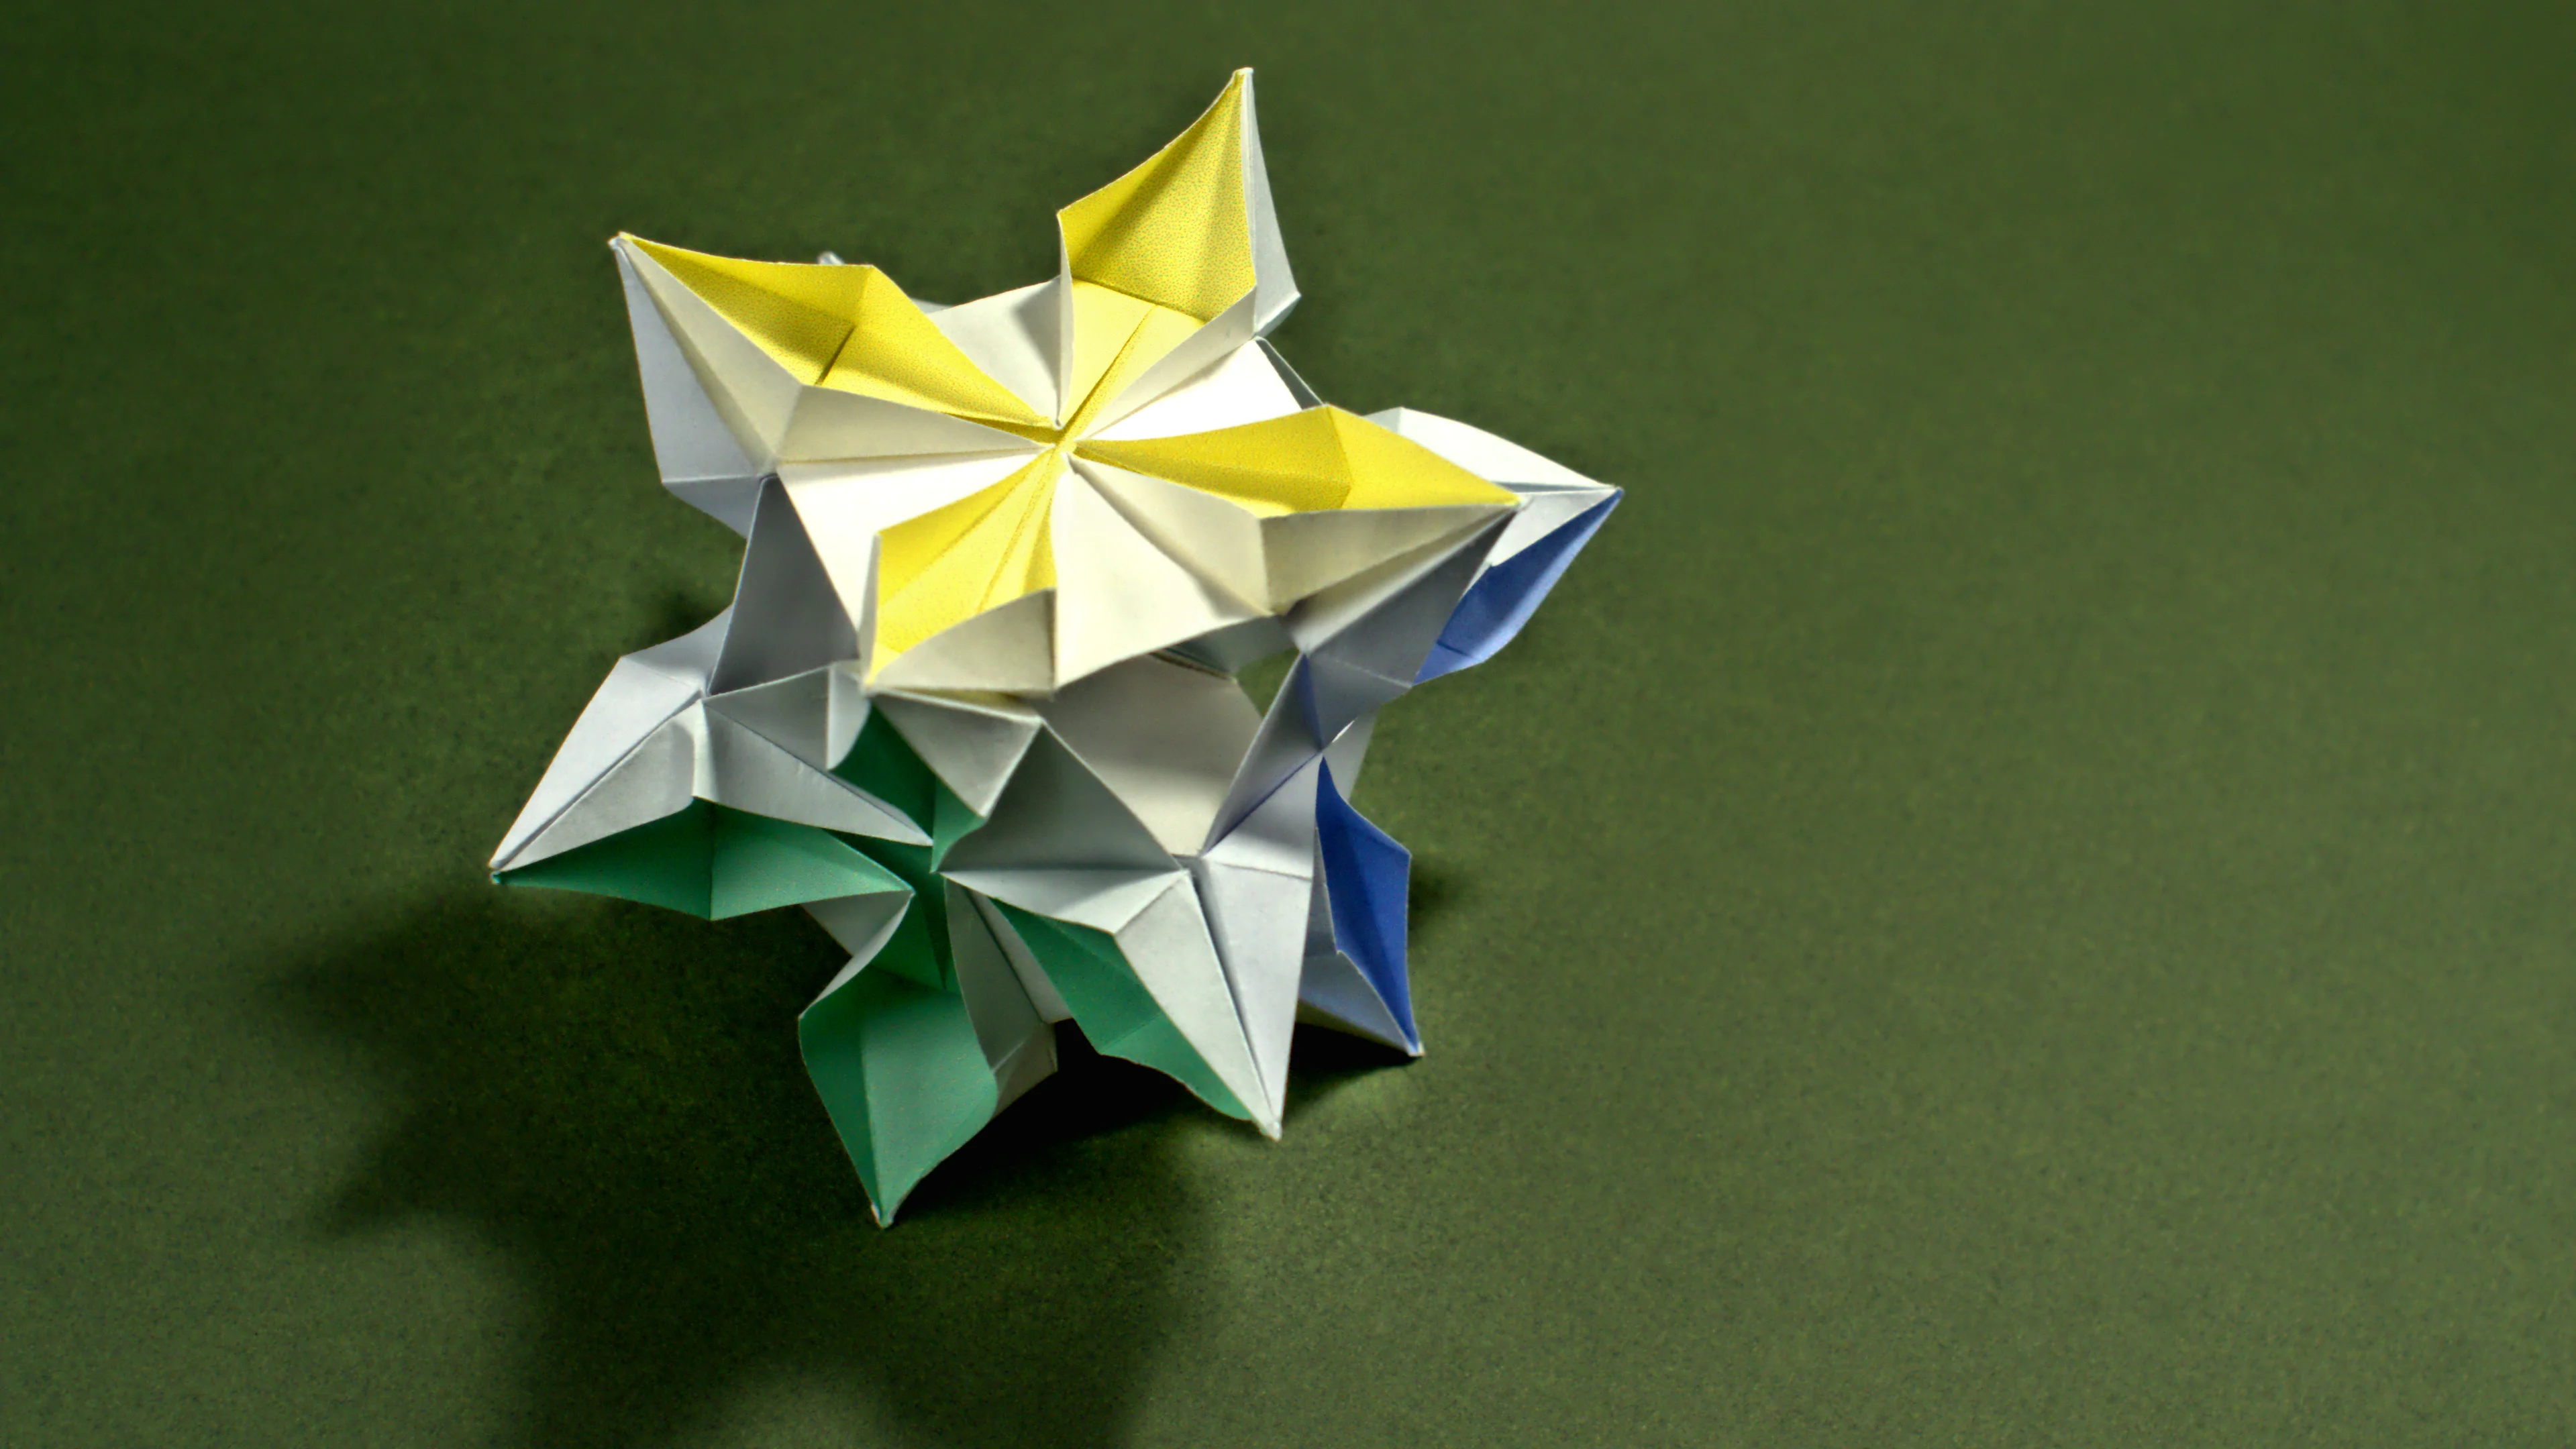 TUTO - Origami d'une étoile à 5 branches on Vimeo